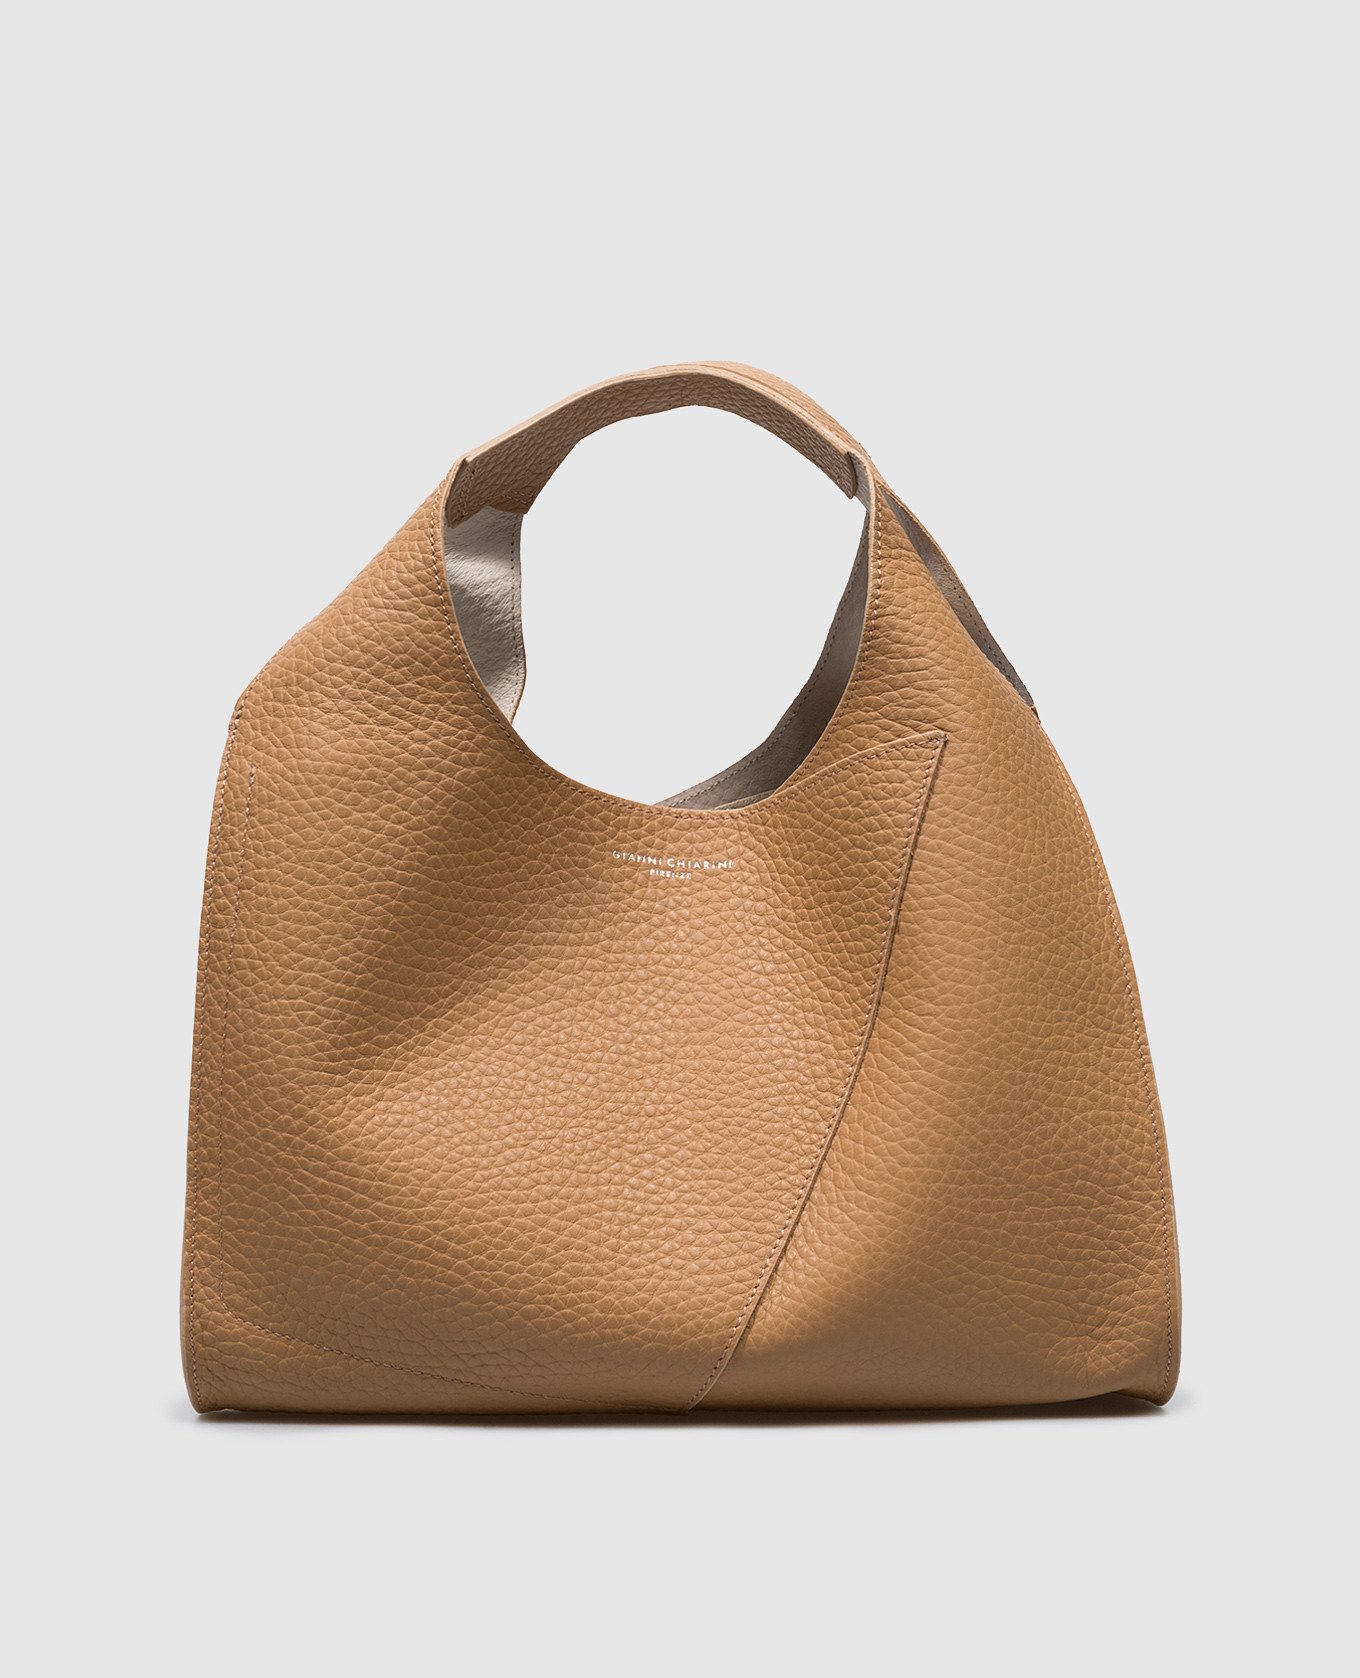 Euforia brown leather bag